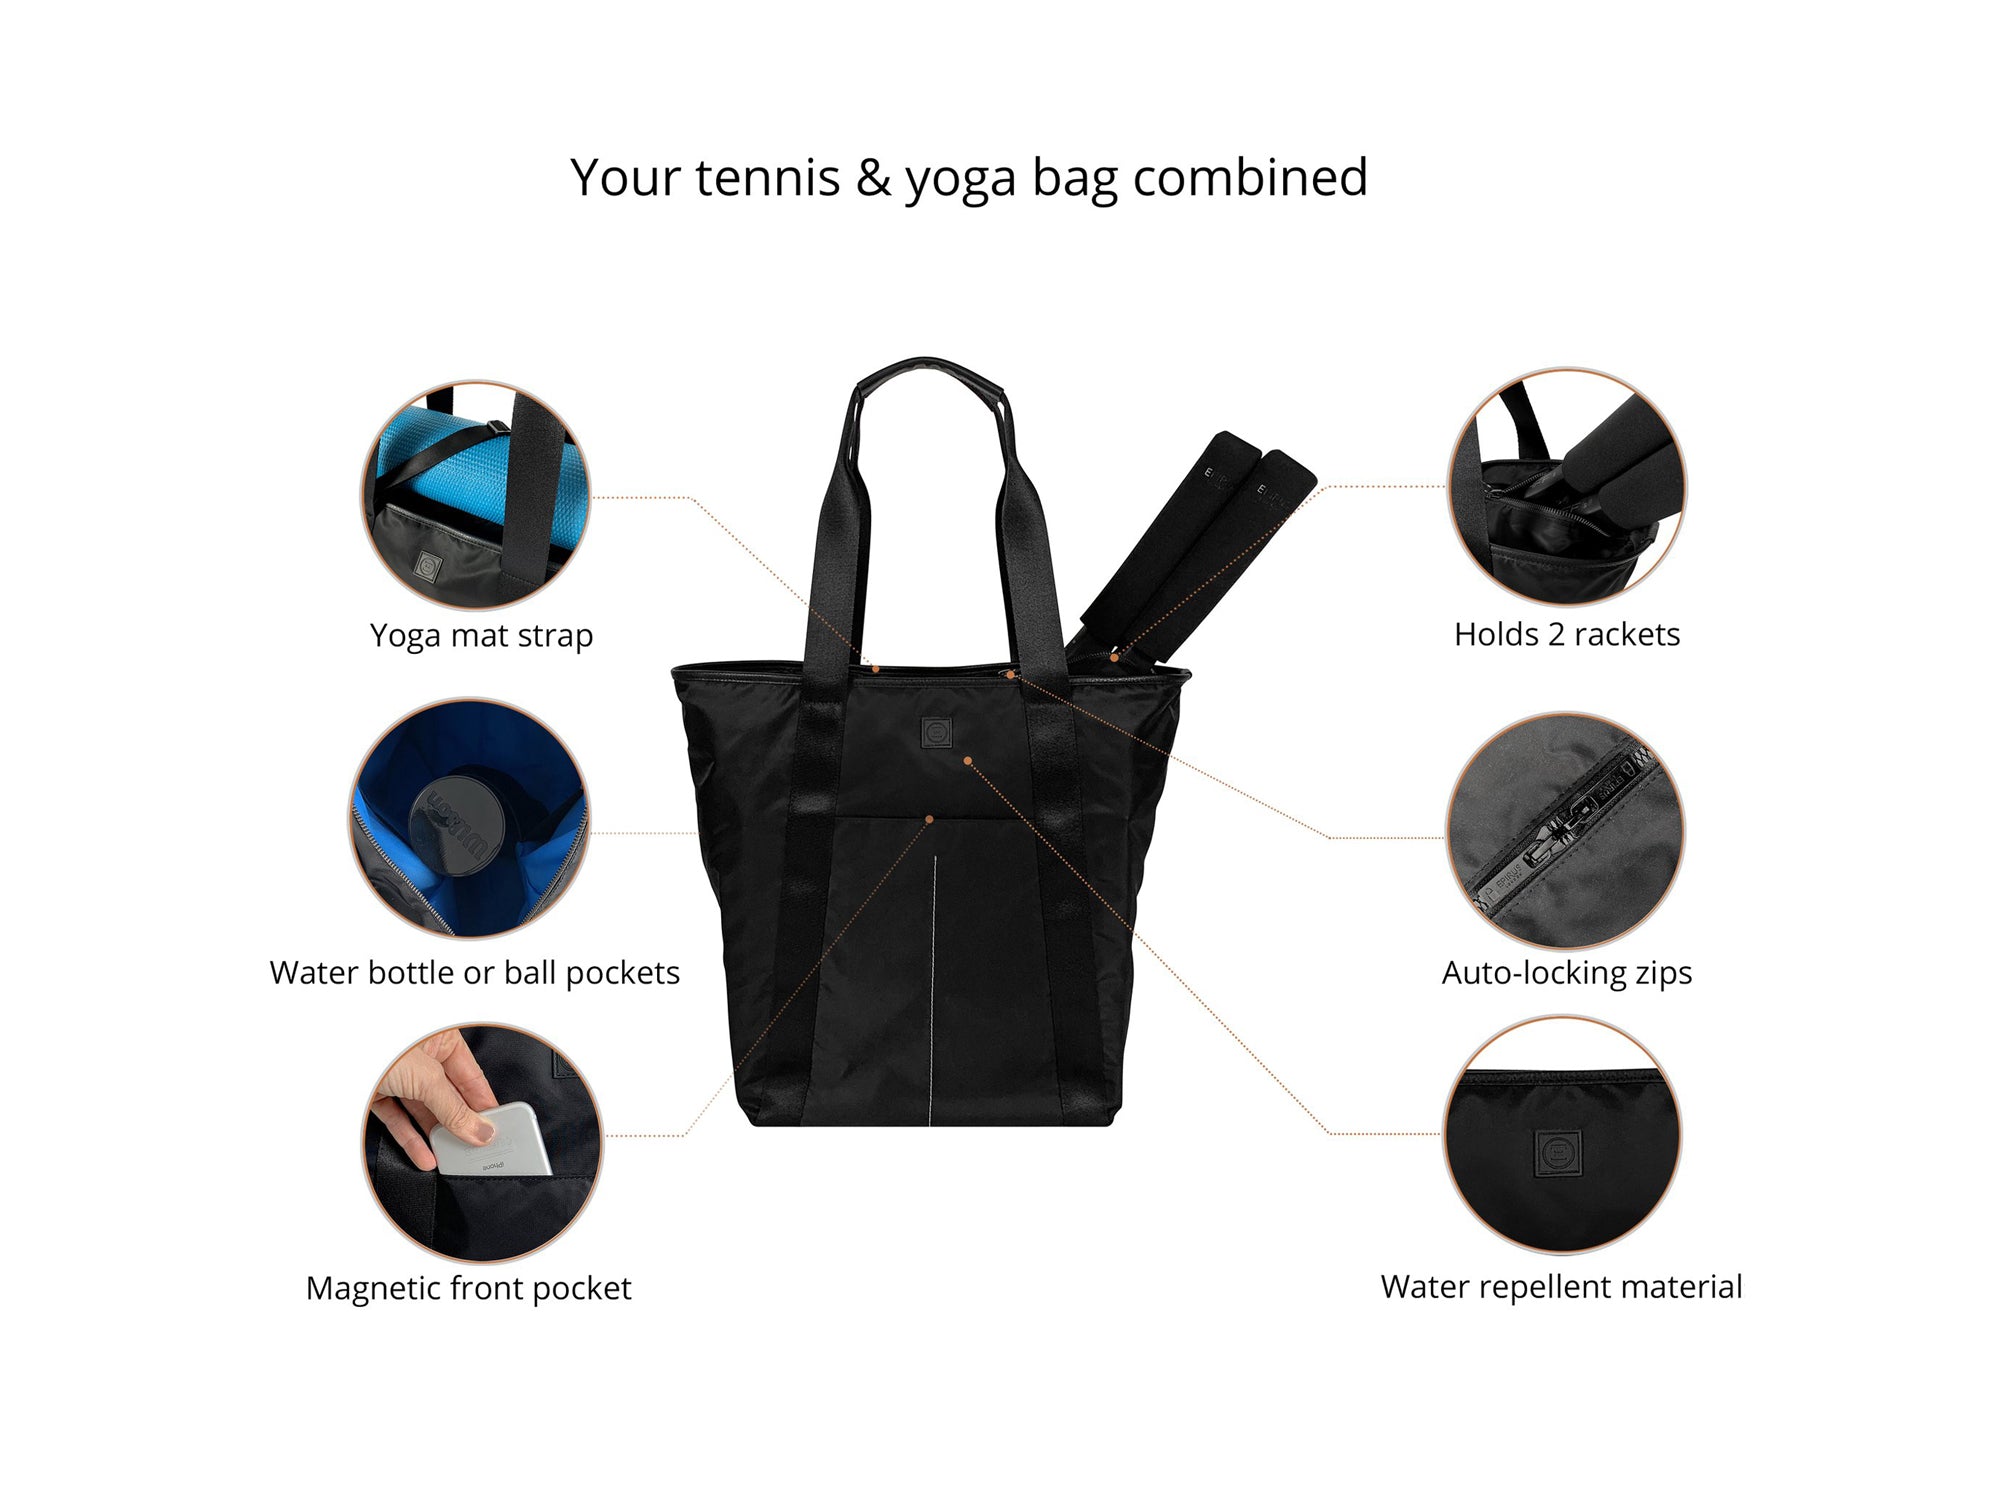 Transition Tote, Black Tennis Tote Bag